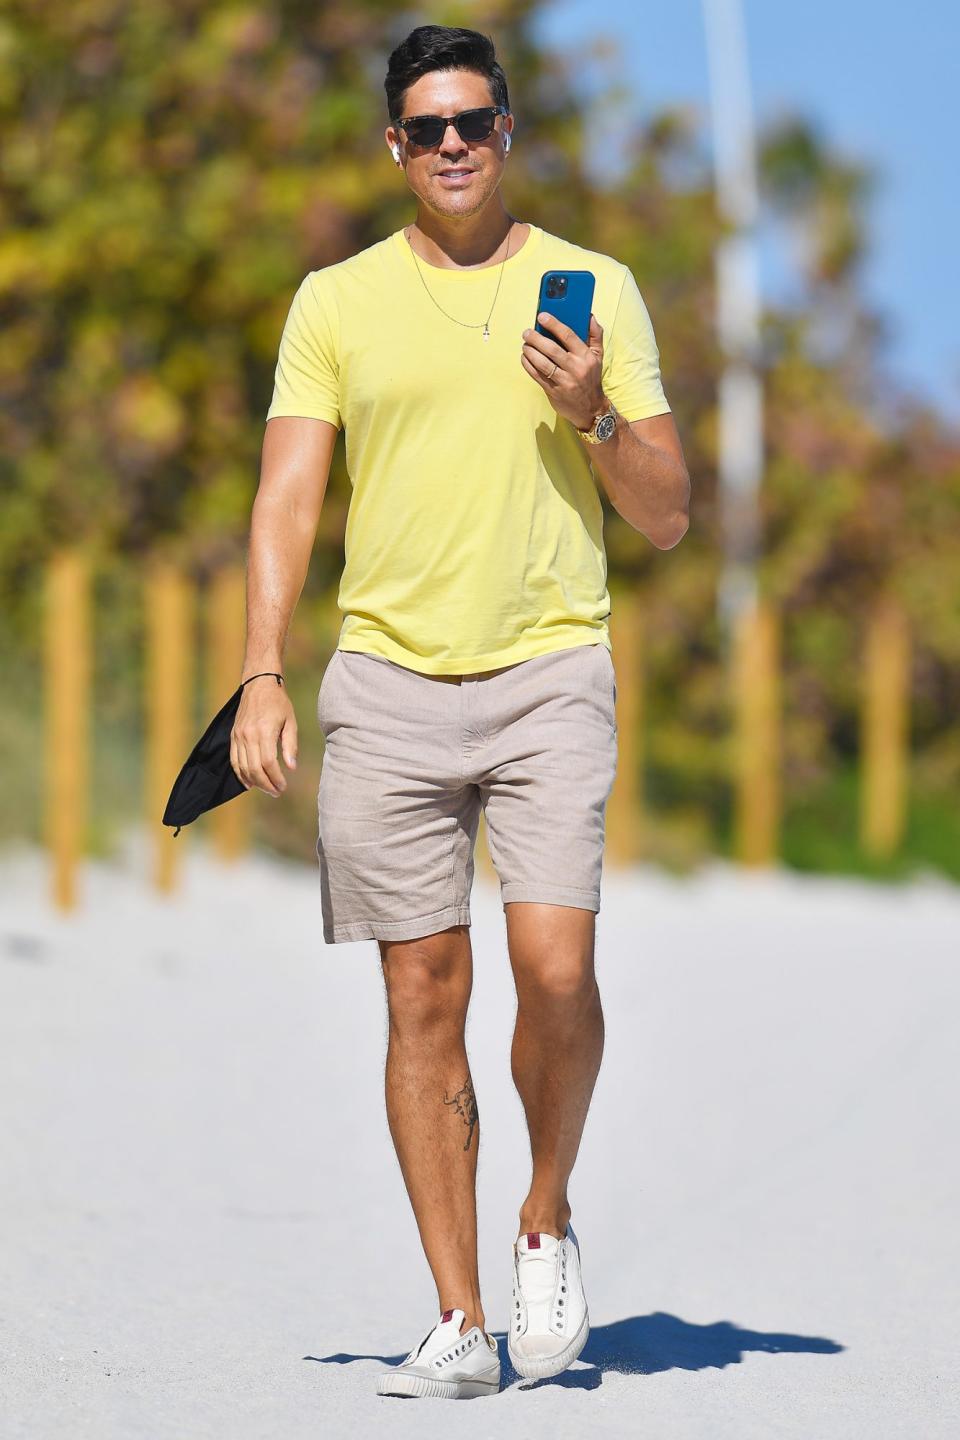 <p><em>Million Dollar Listing</em>'s Fredrik Eklund talks on his phone during a stroll in Miami over the weekend.</p>